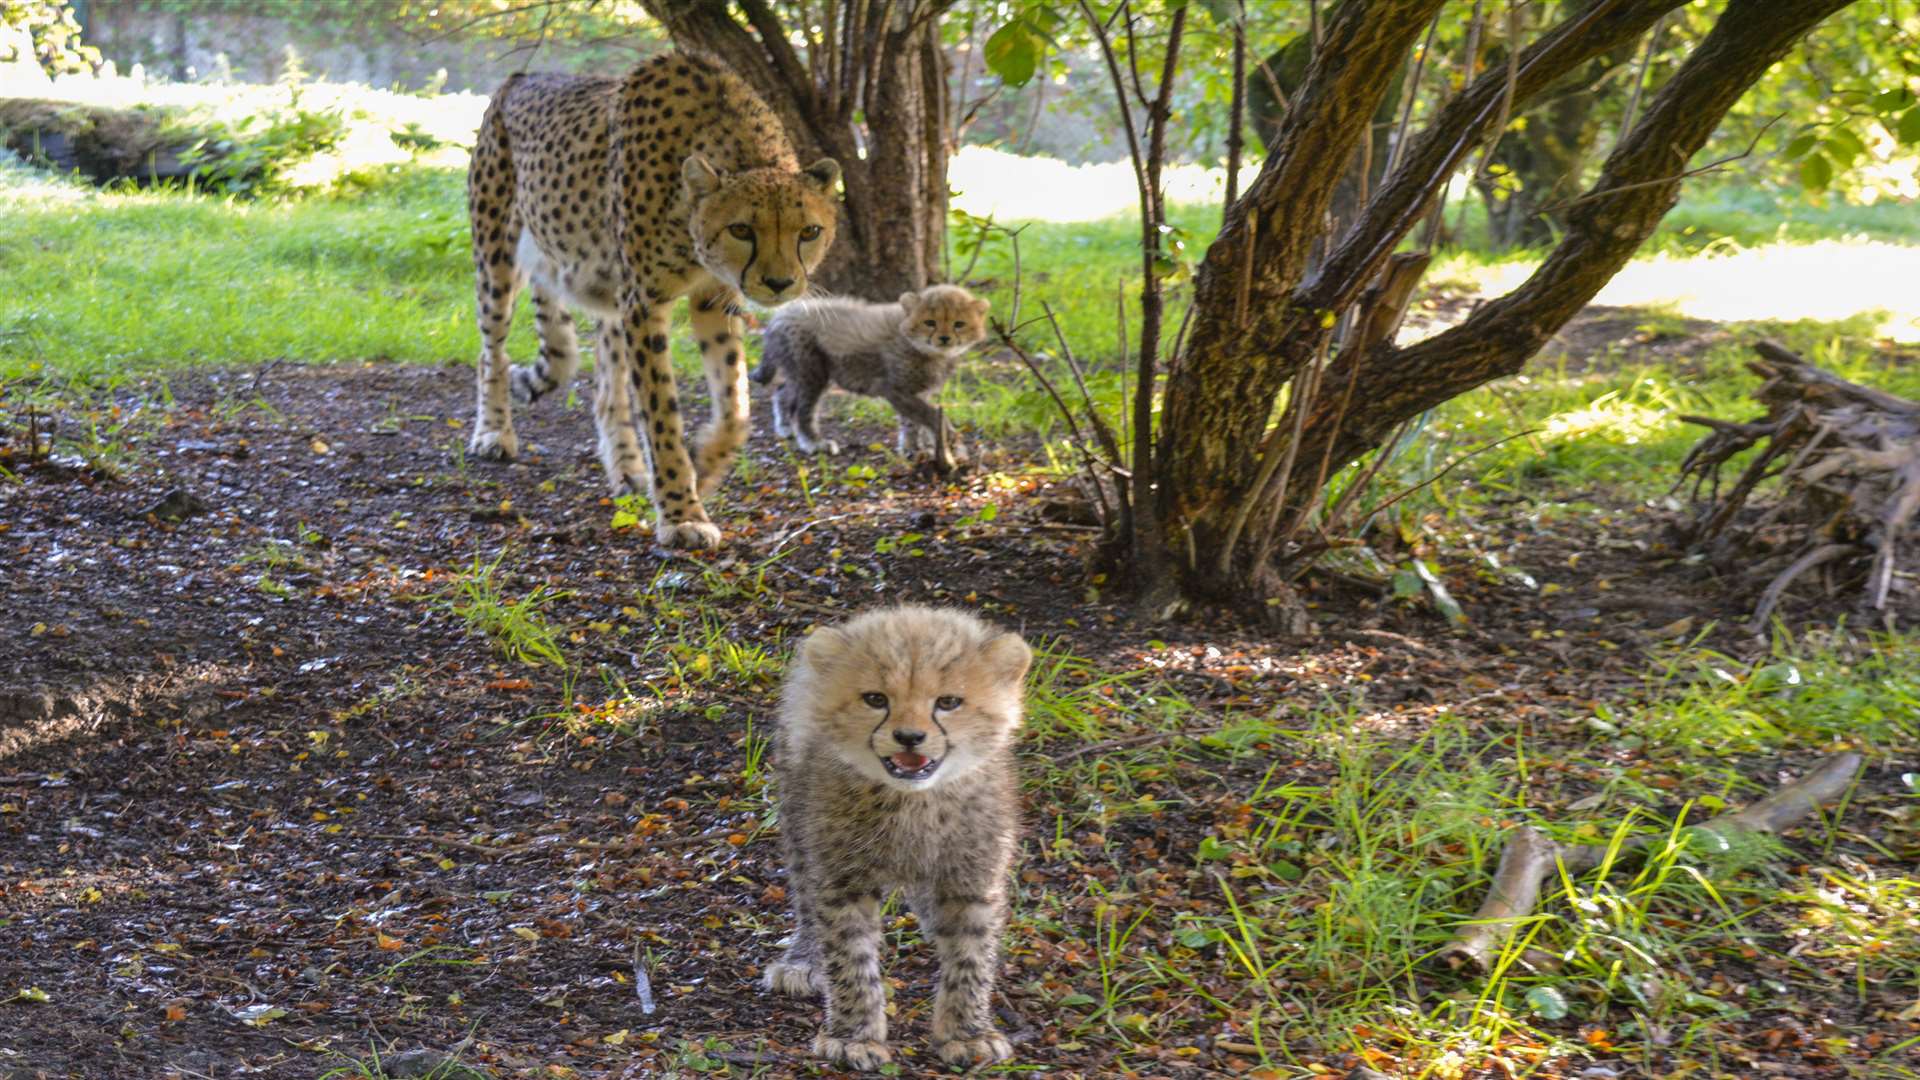 The cheetah cubs with their mum, Split